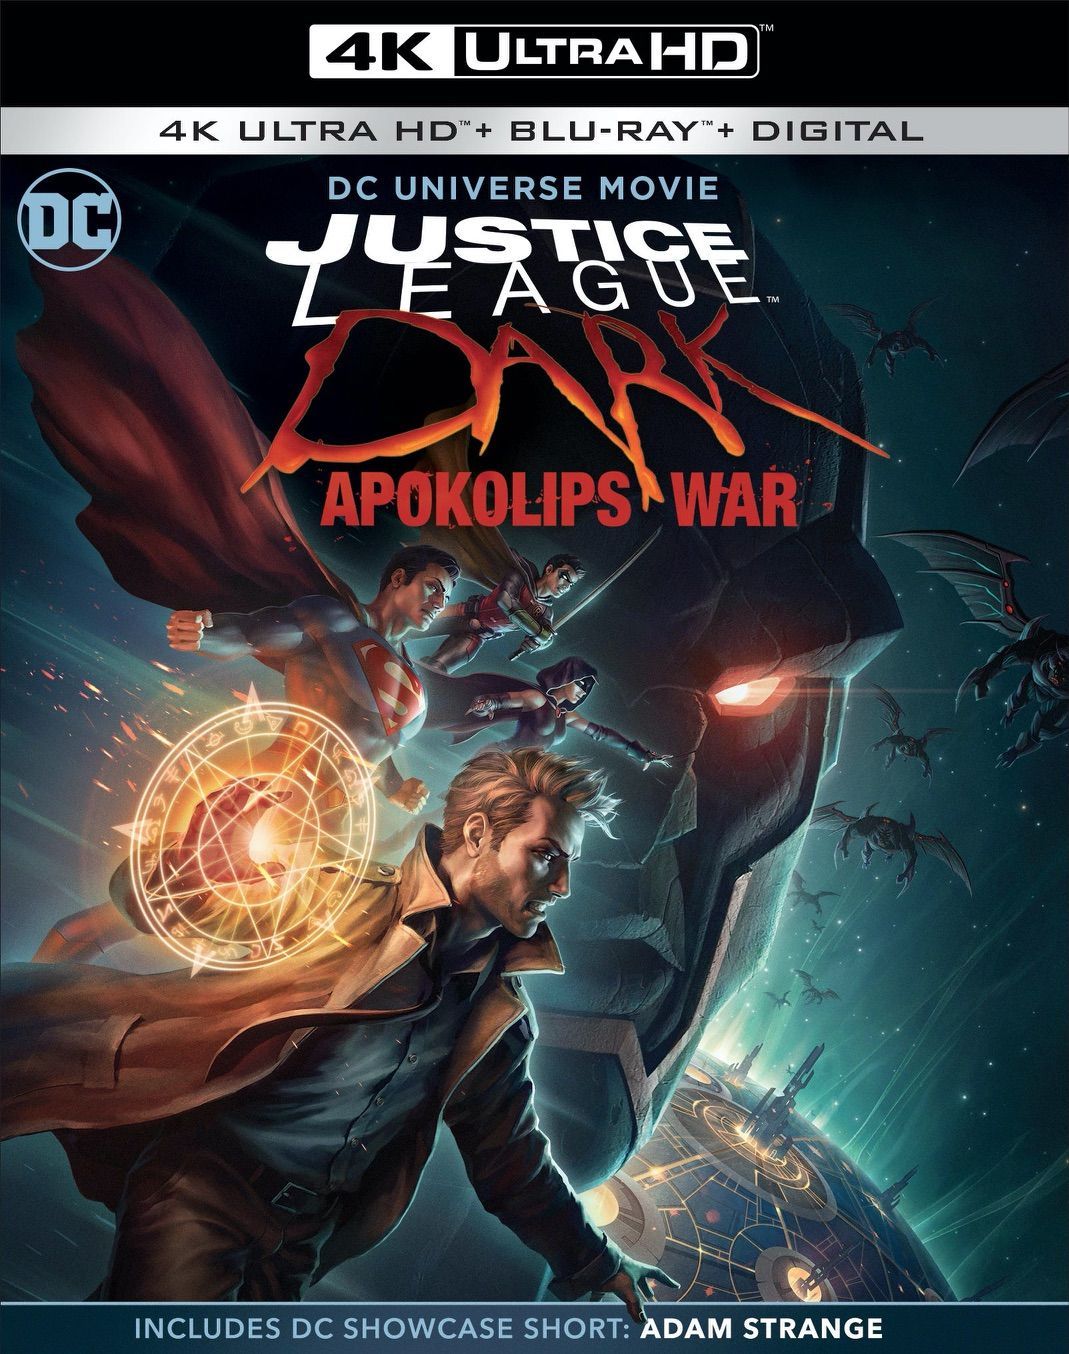 Justice League Dark: Apokolips War” Arriving in May in 2020